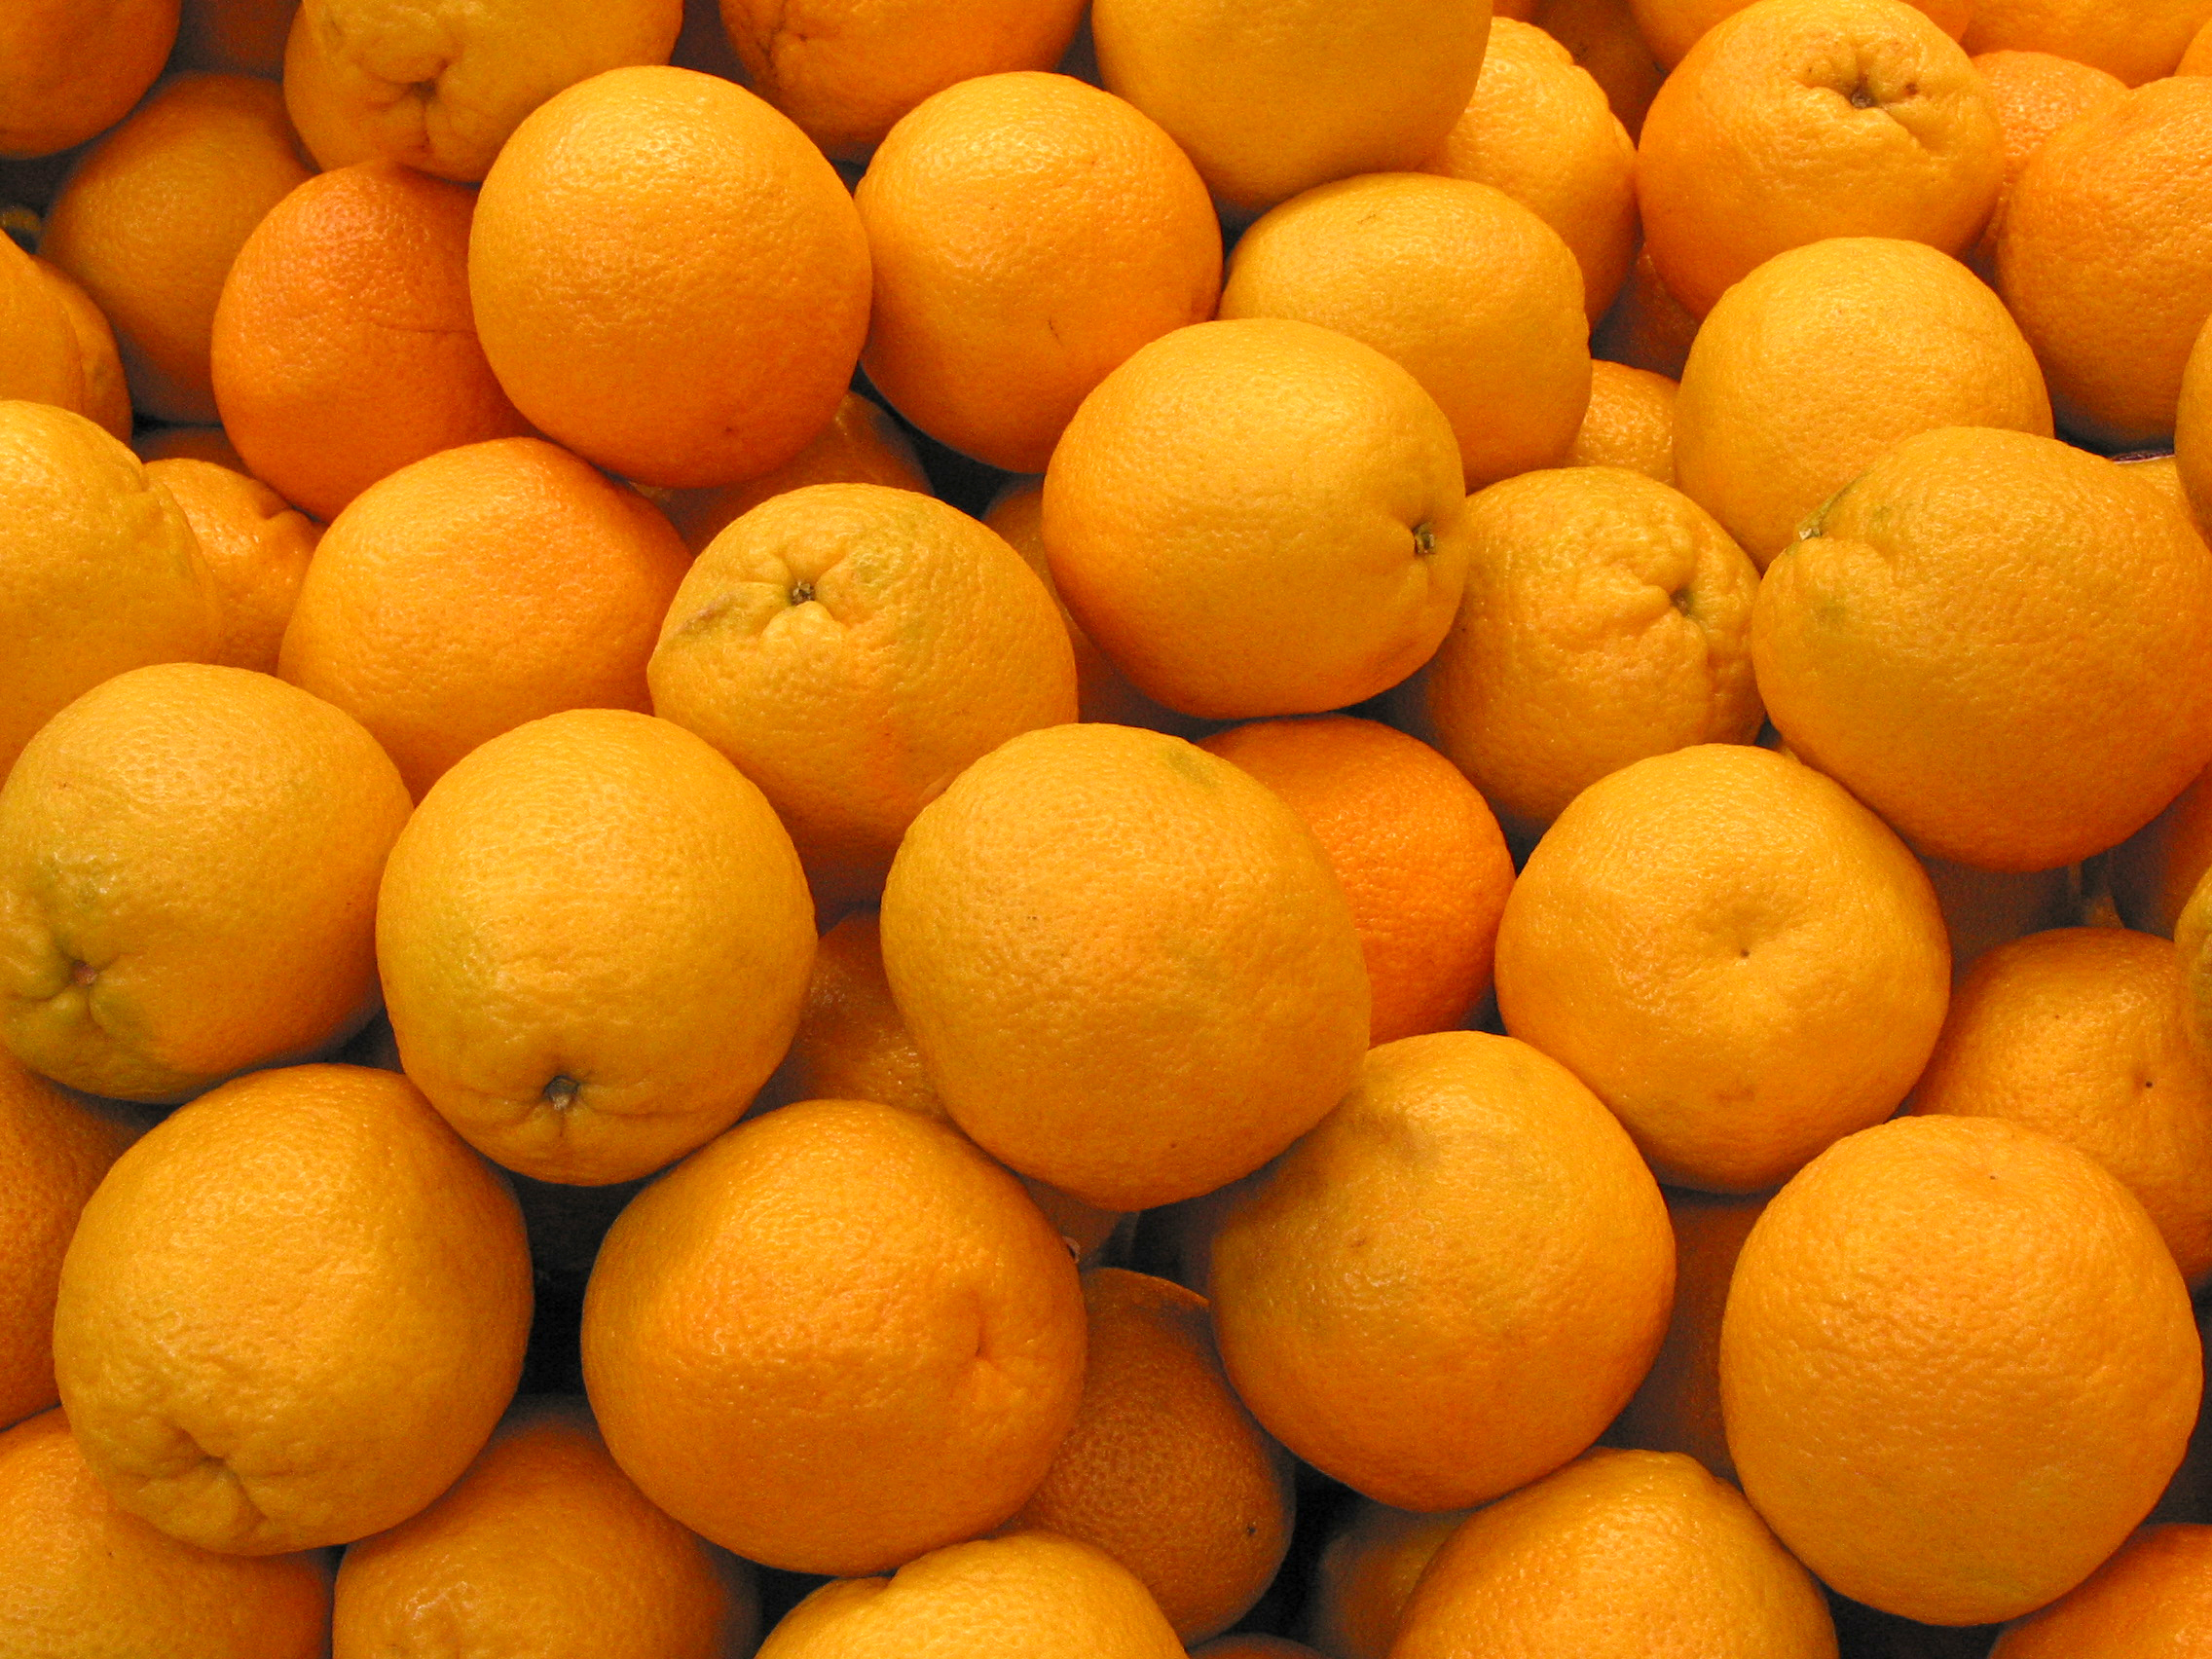 Free Orange Photo Orange Picture Oranges Image Royalty Free Fruit